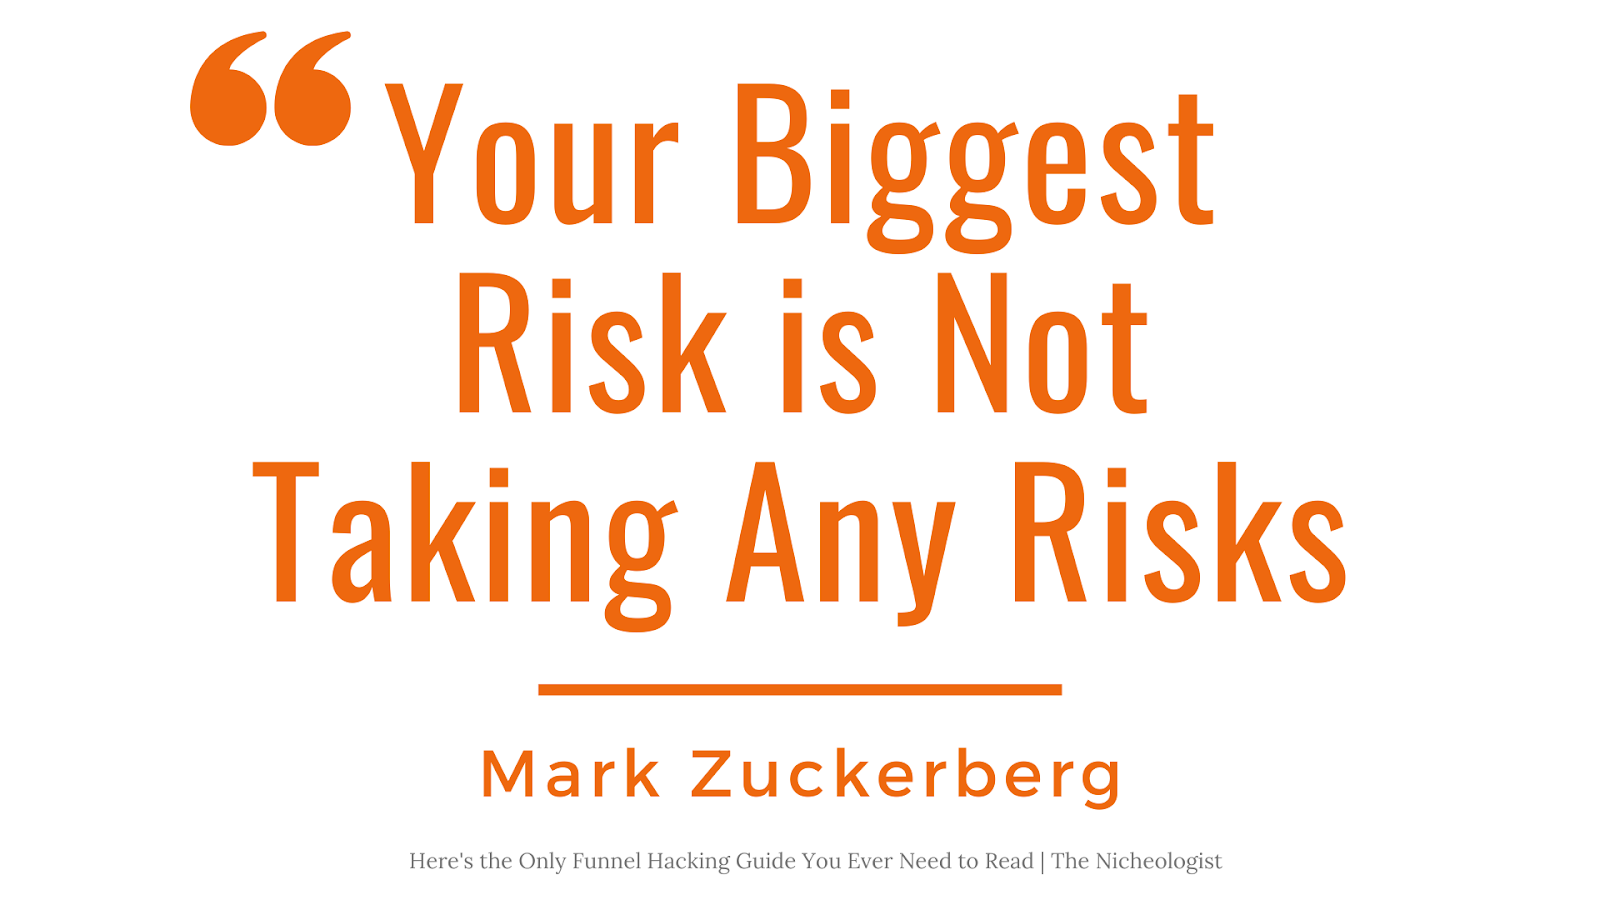 Your biggest risk is not taking any risks - Mark Zuckerberg
